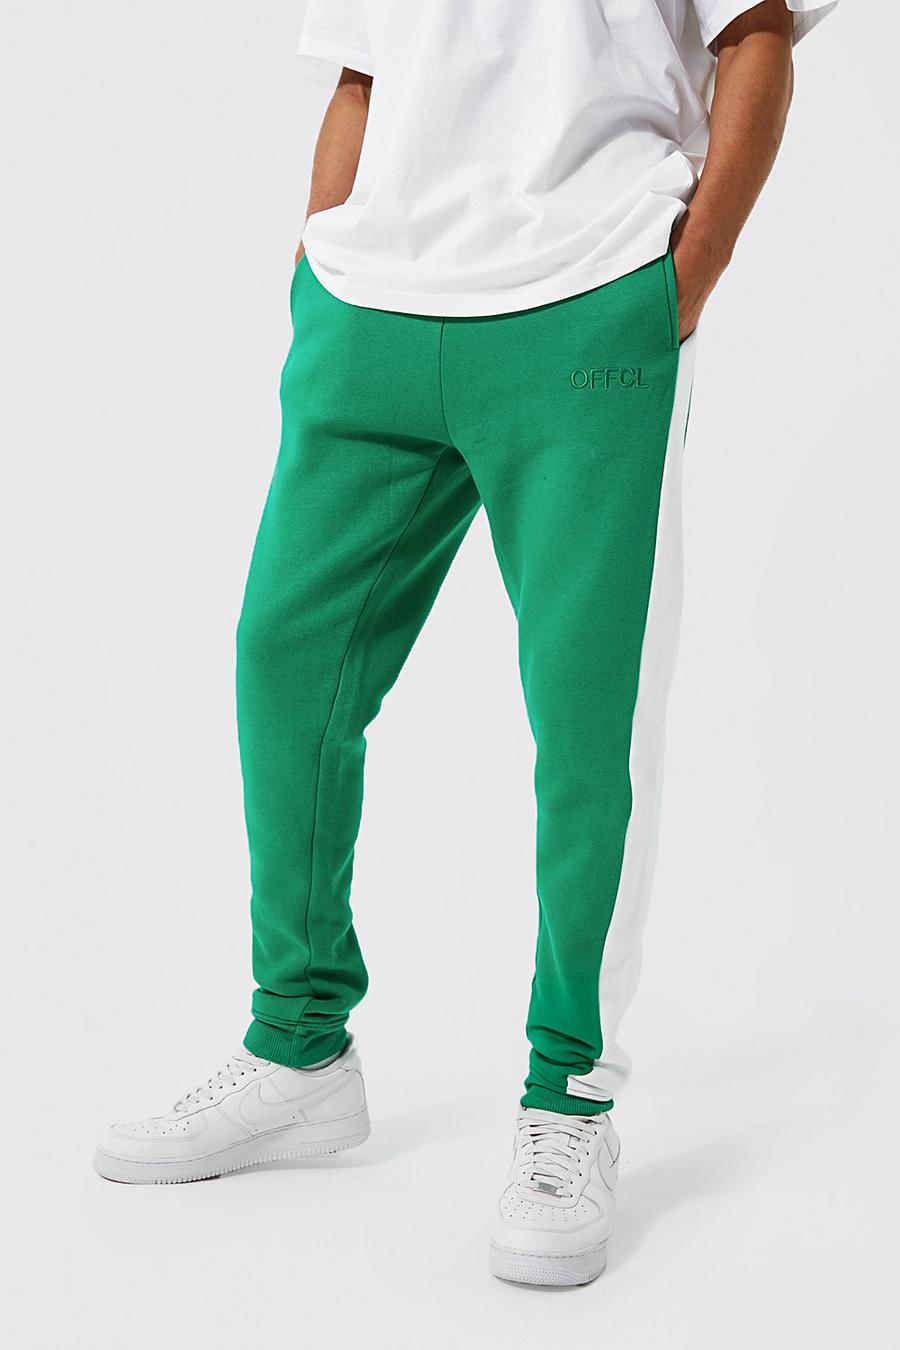 Pantalón deportivo Tall Offcl pitillo con panel lateral, Bright green image number 1